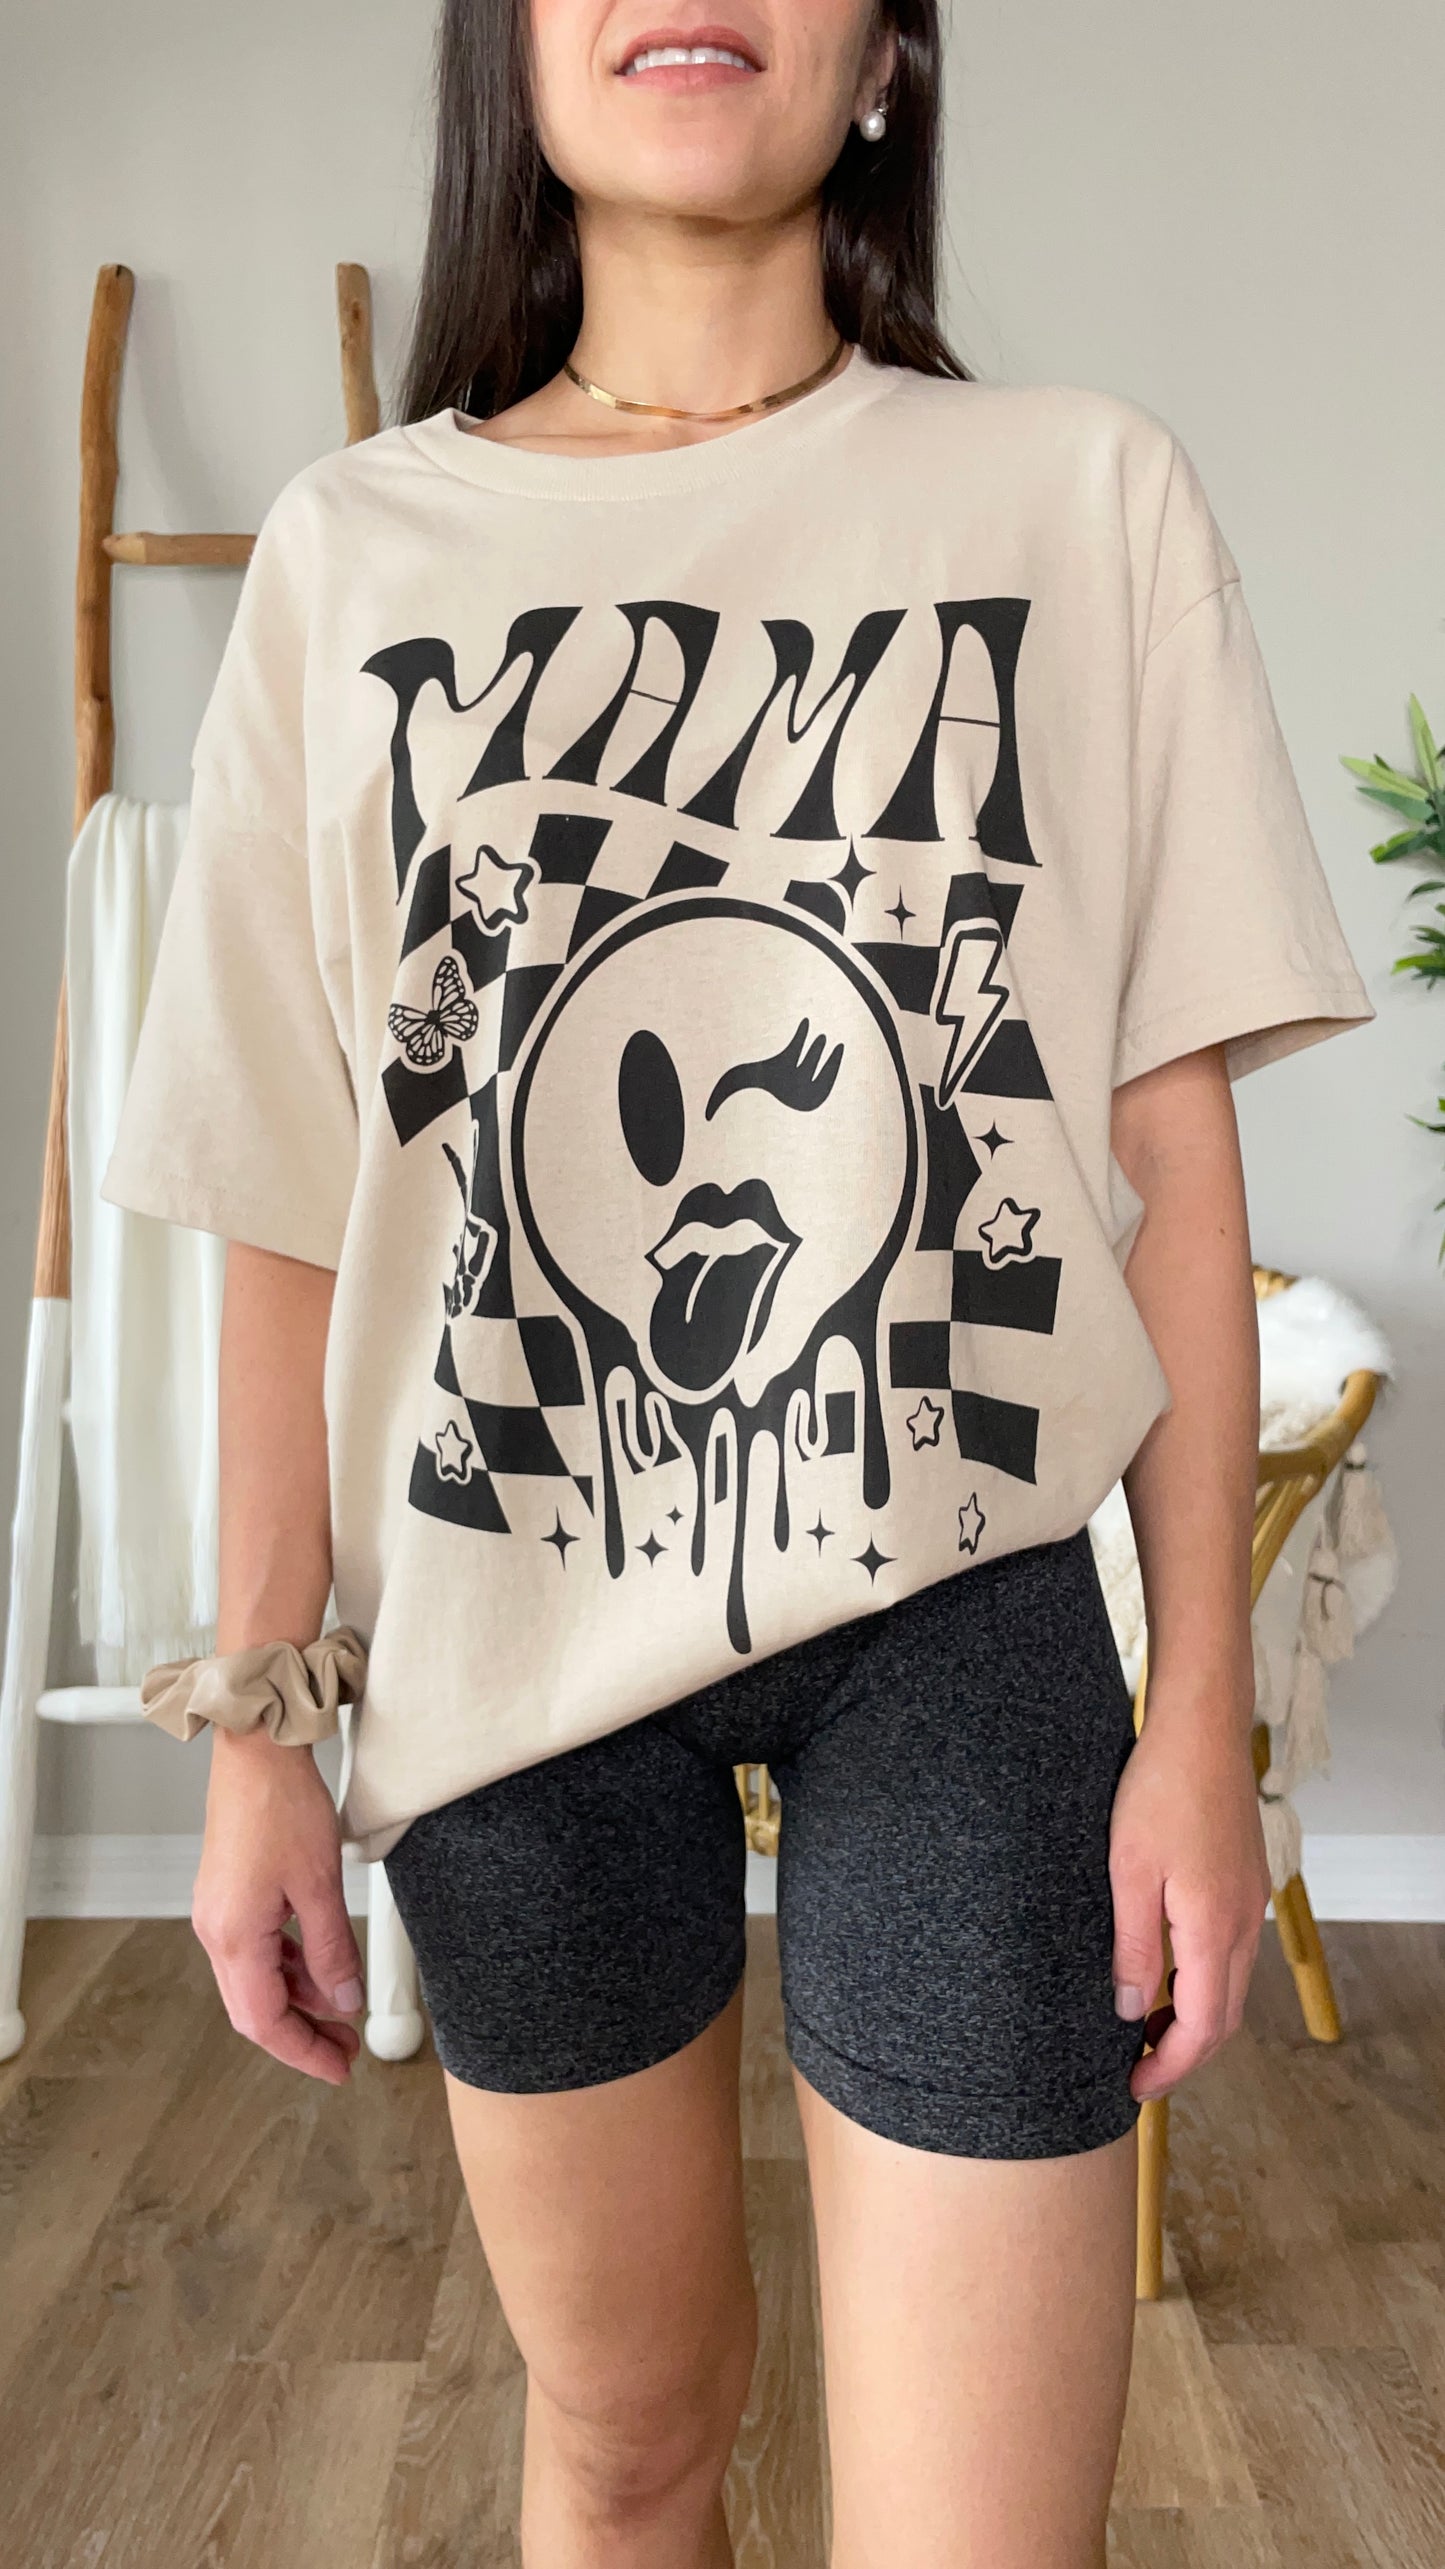 Groovy Retro MAMA (front) - Unisex T-shirt